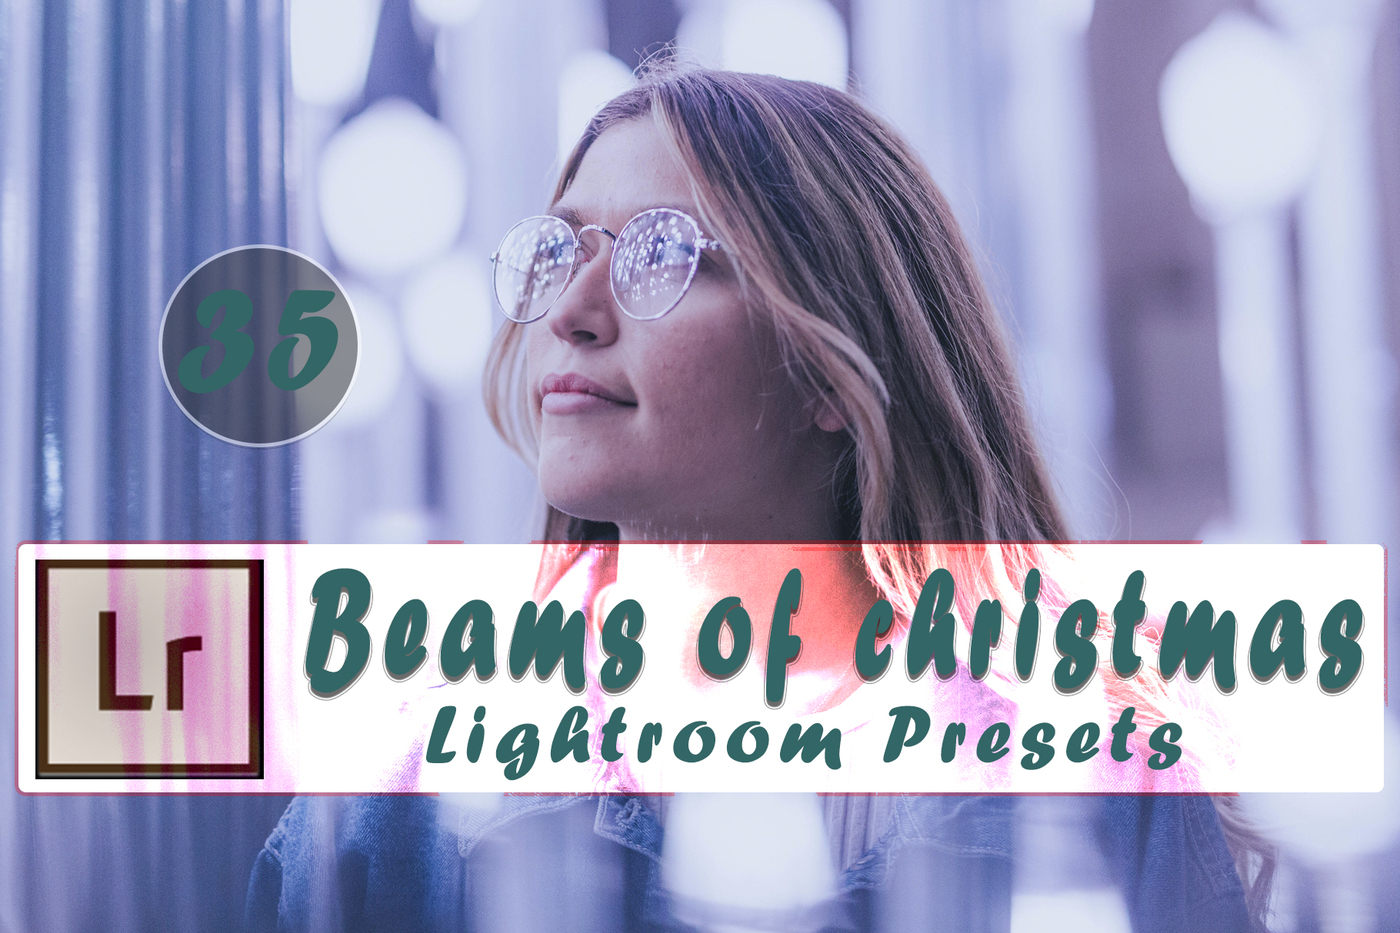 Beams of Christmas Lightroom Presets 